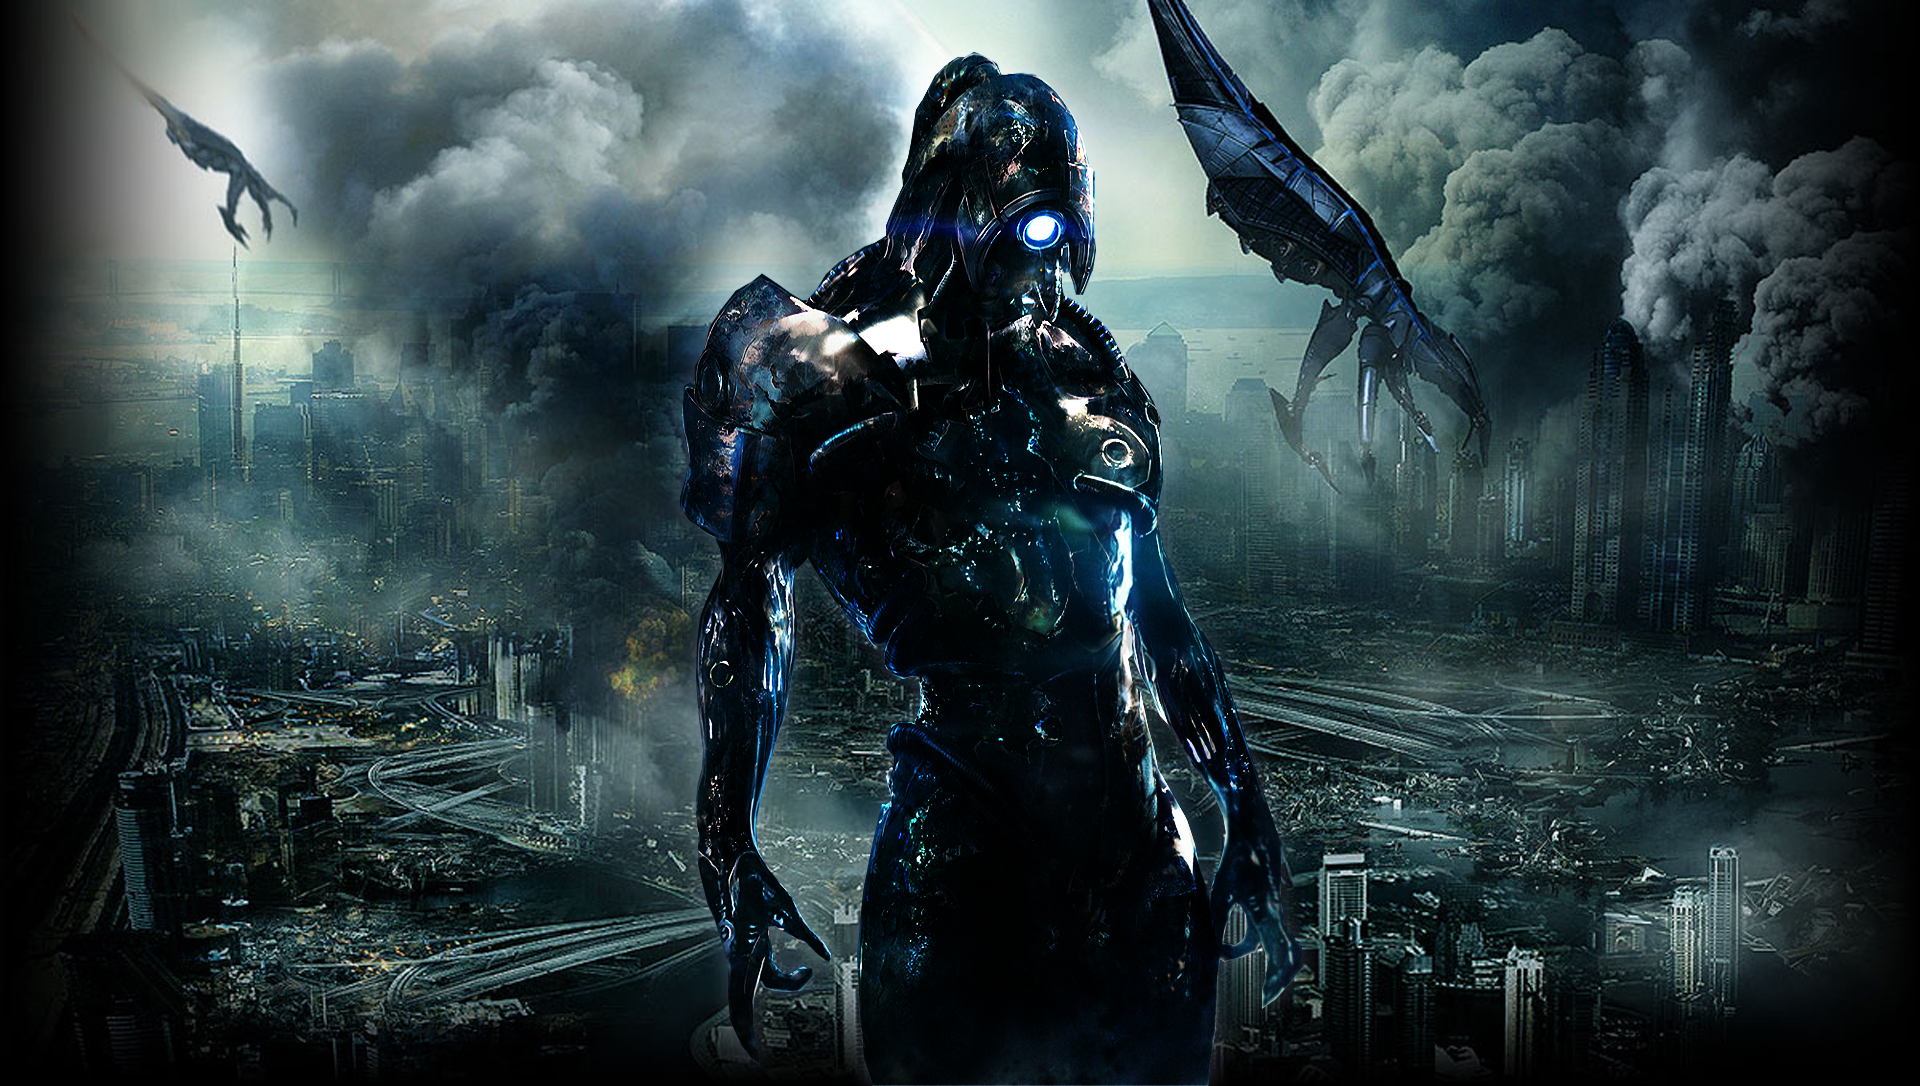 Legion Mass Effect Apocalyptic Reapers Destruction Mass Effect 3 Video Games 1920x1086